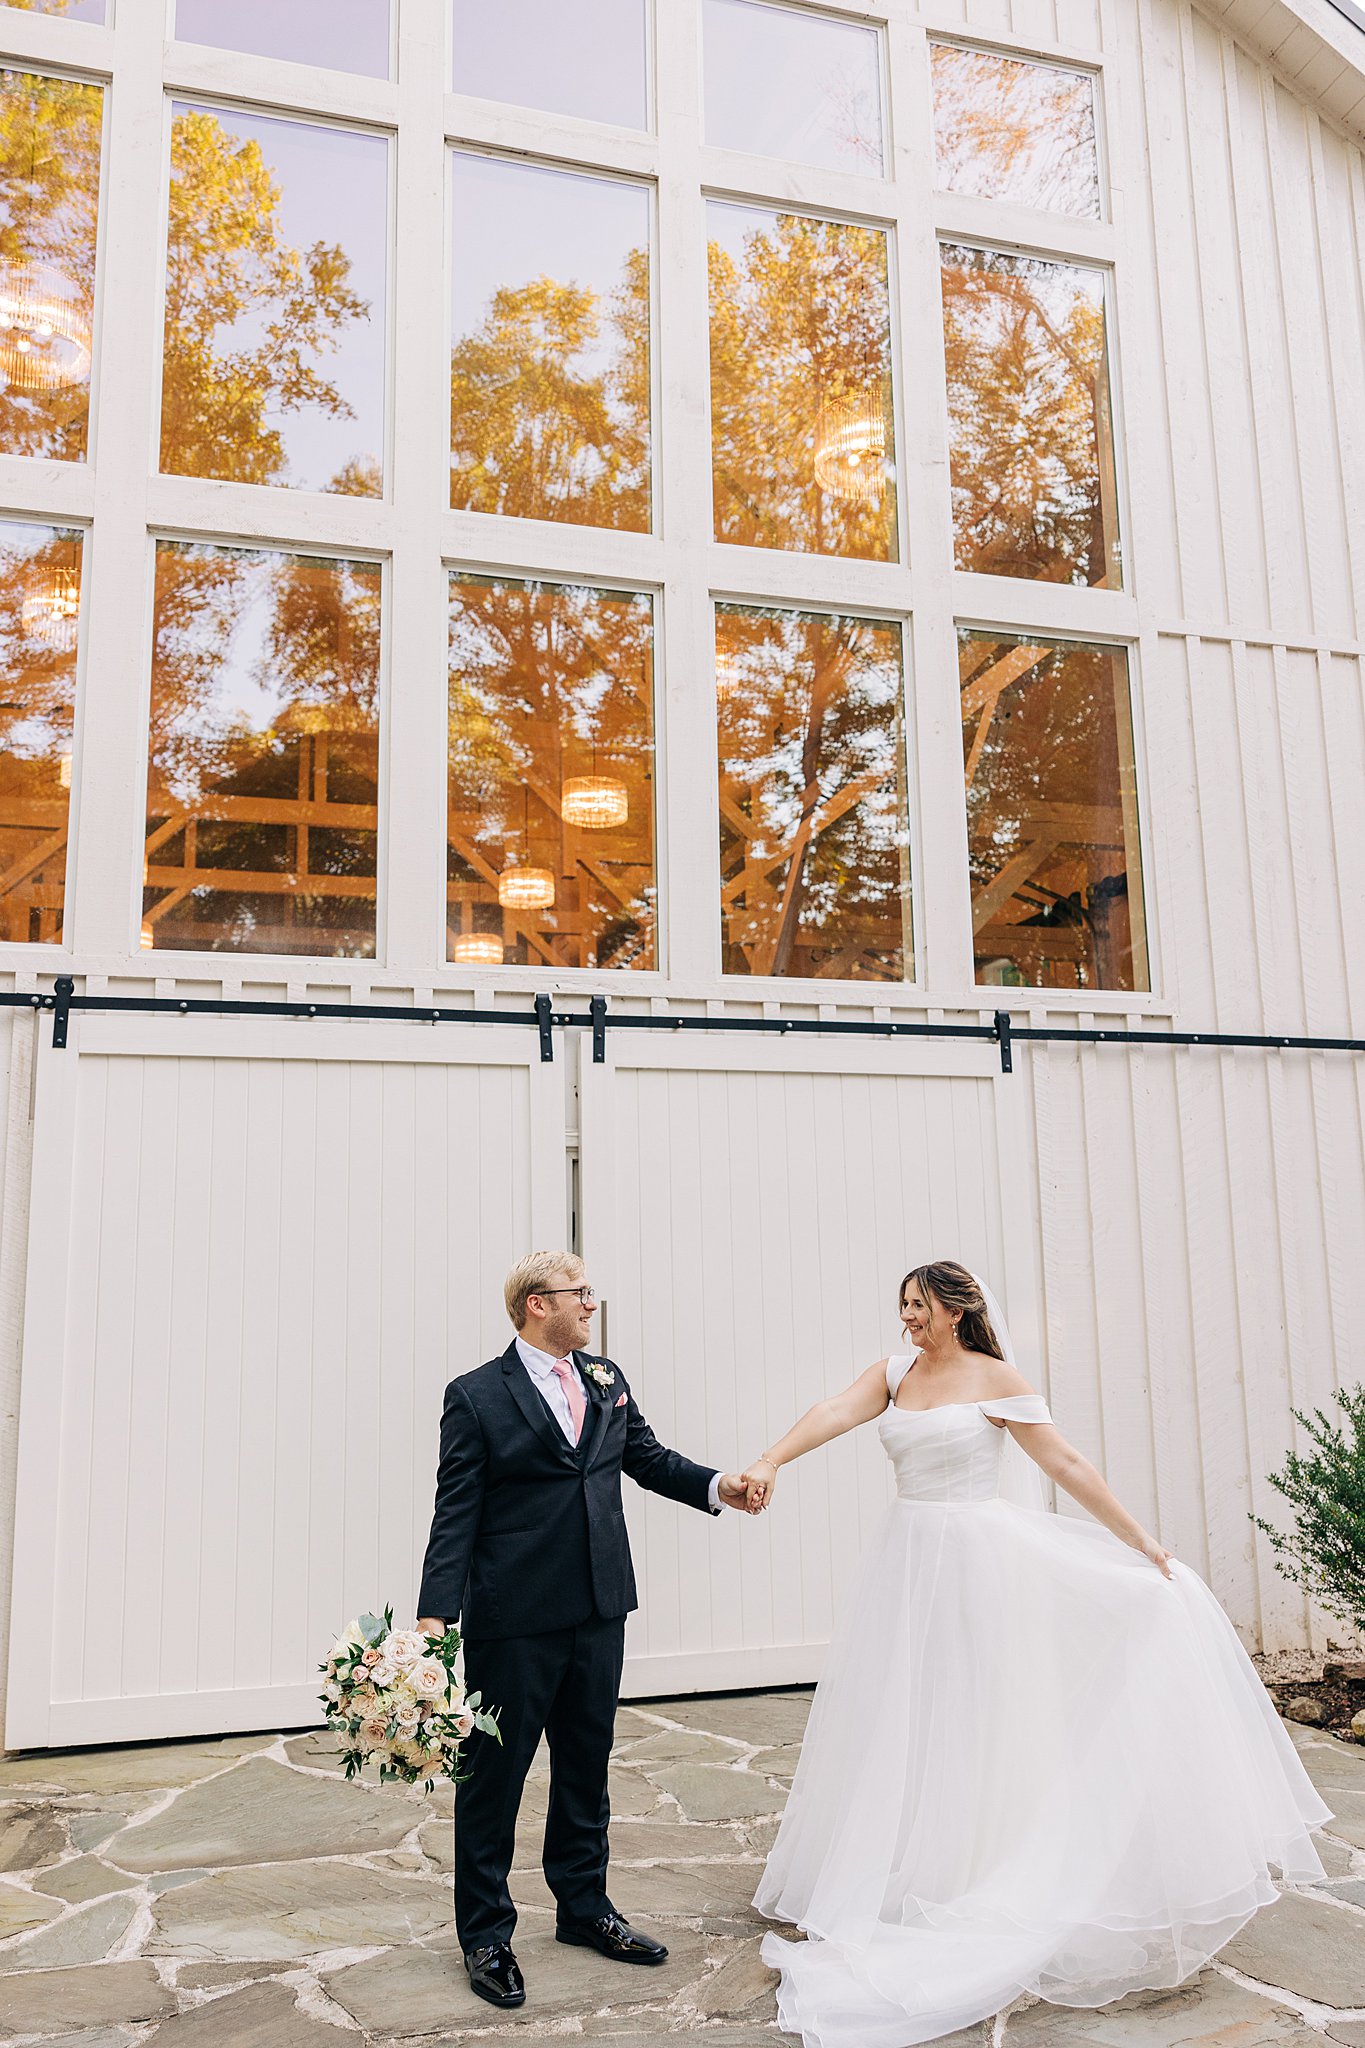 Newlyweds dance outside the main entrance barn doors at the carolina grove wedding venue